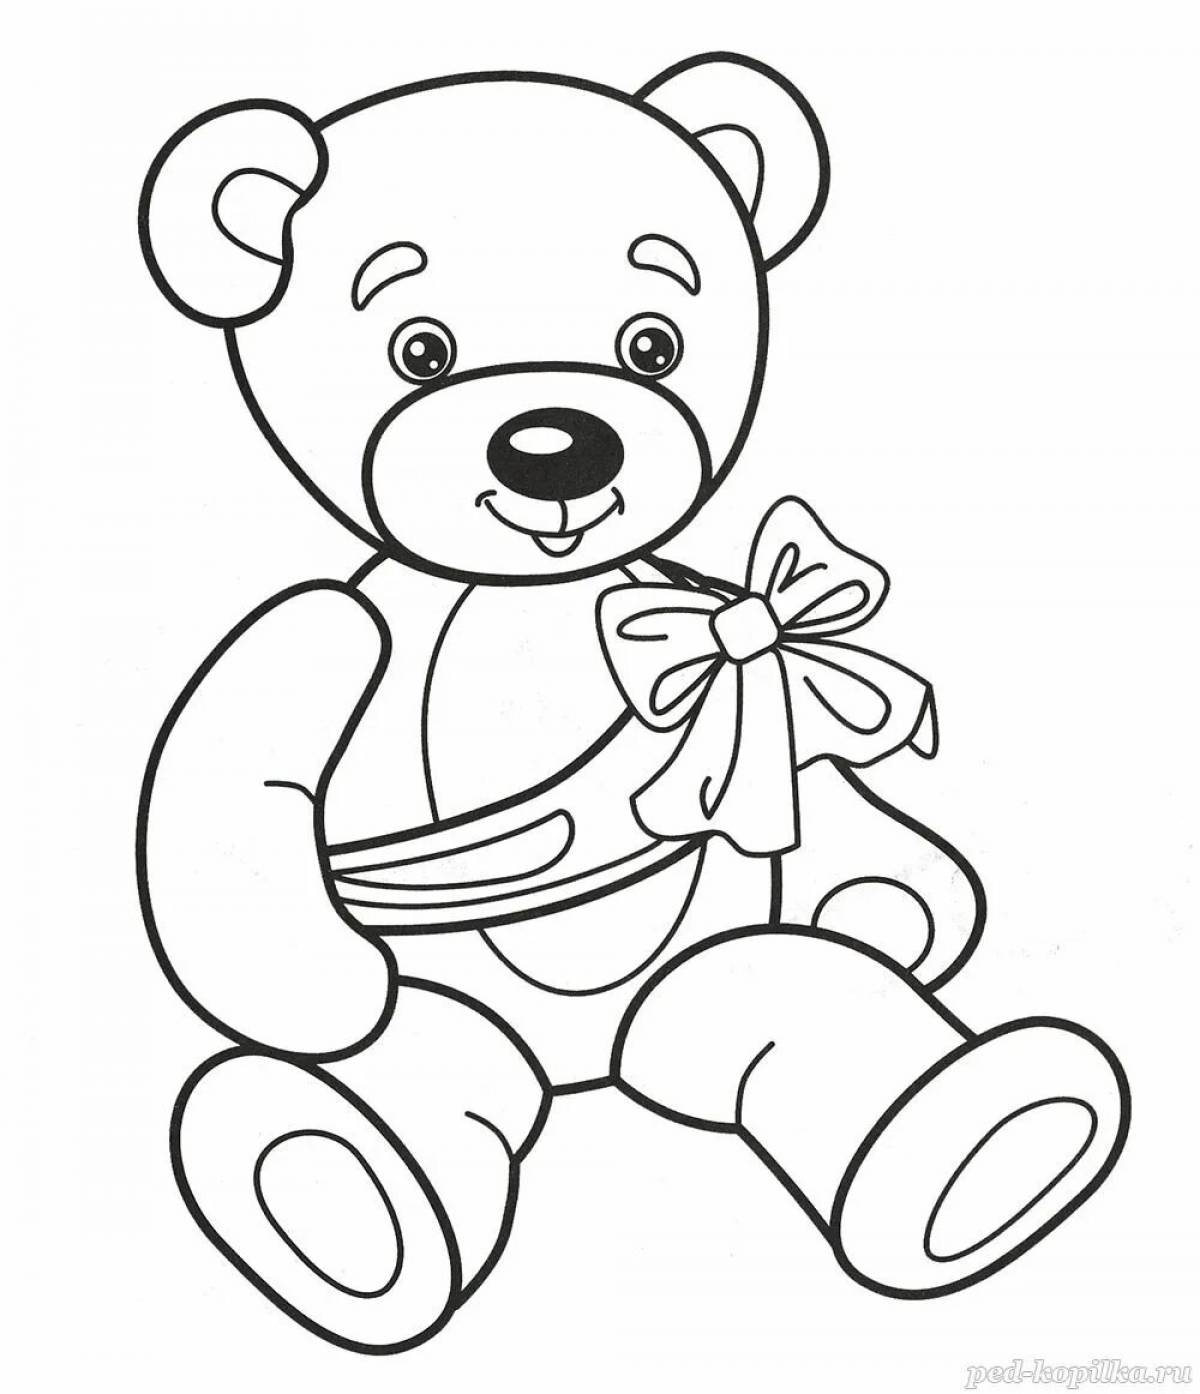 Barto for preschoolers #4